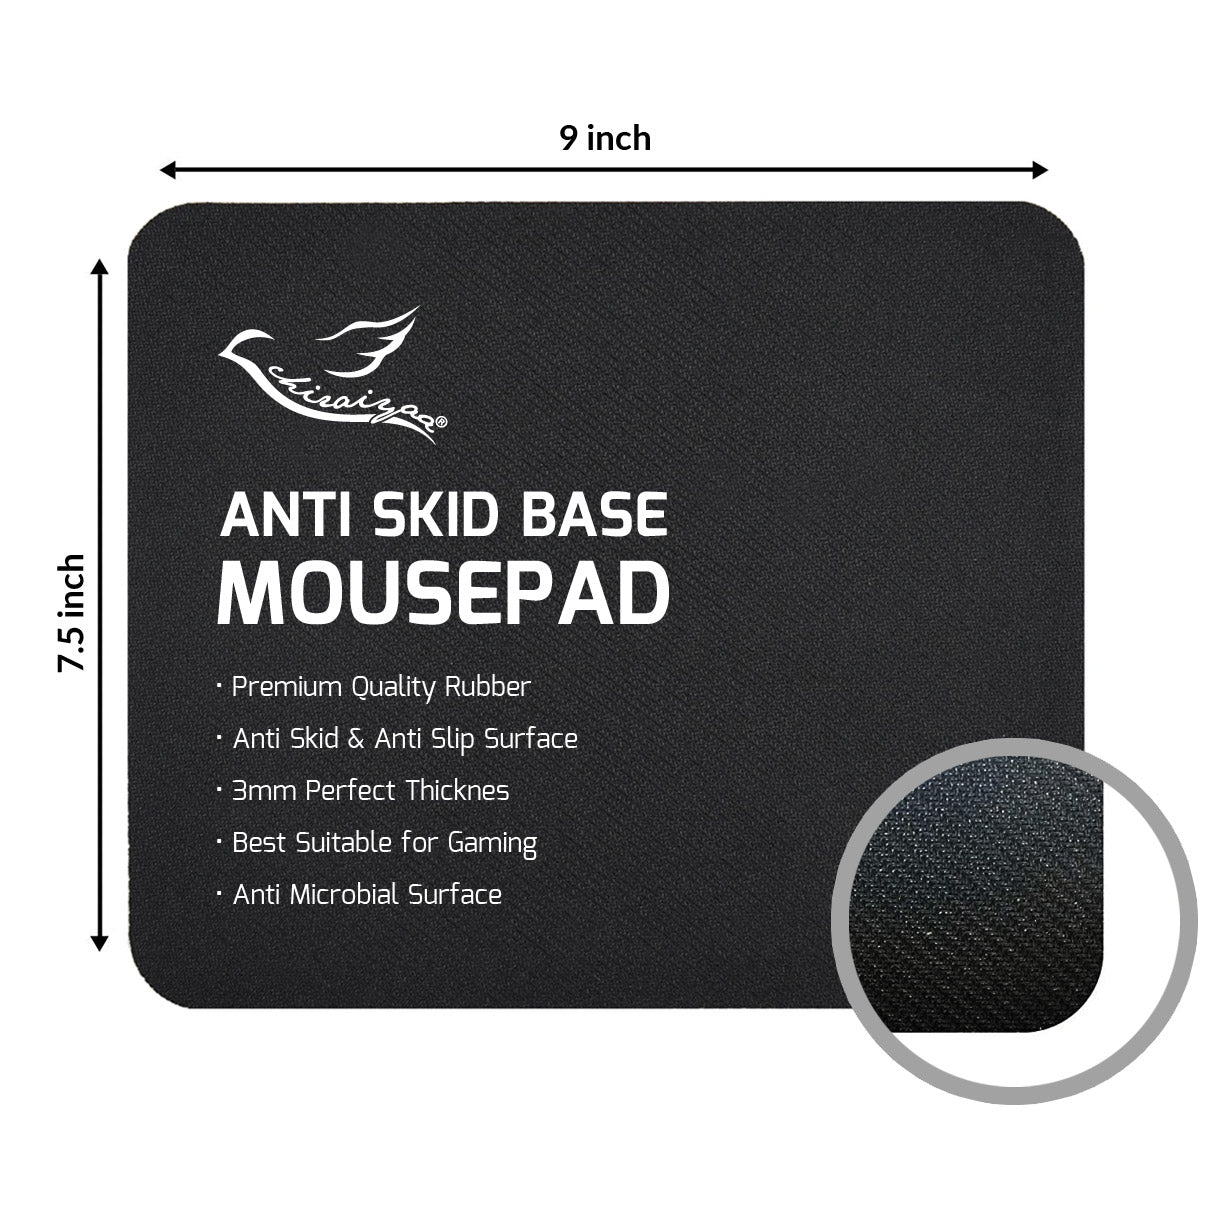 Black Golden Stripes Designer Printed Premium Mouse pad (9 in x 7.5 in)